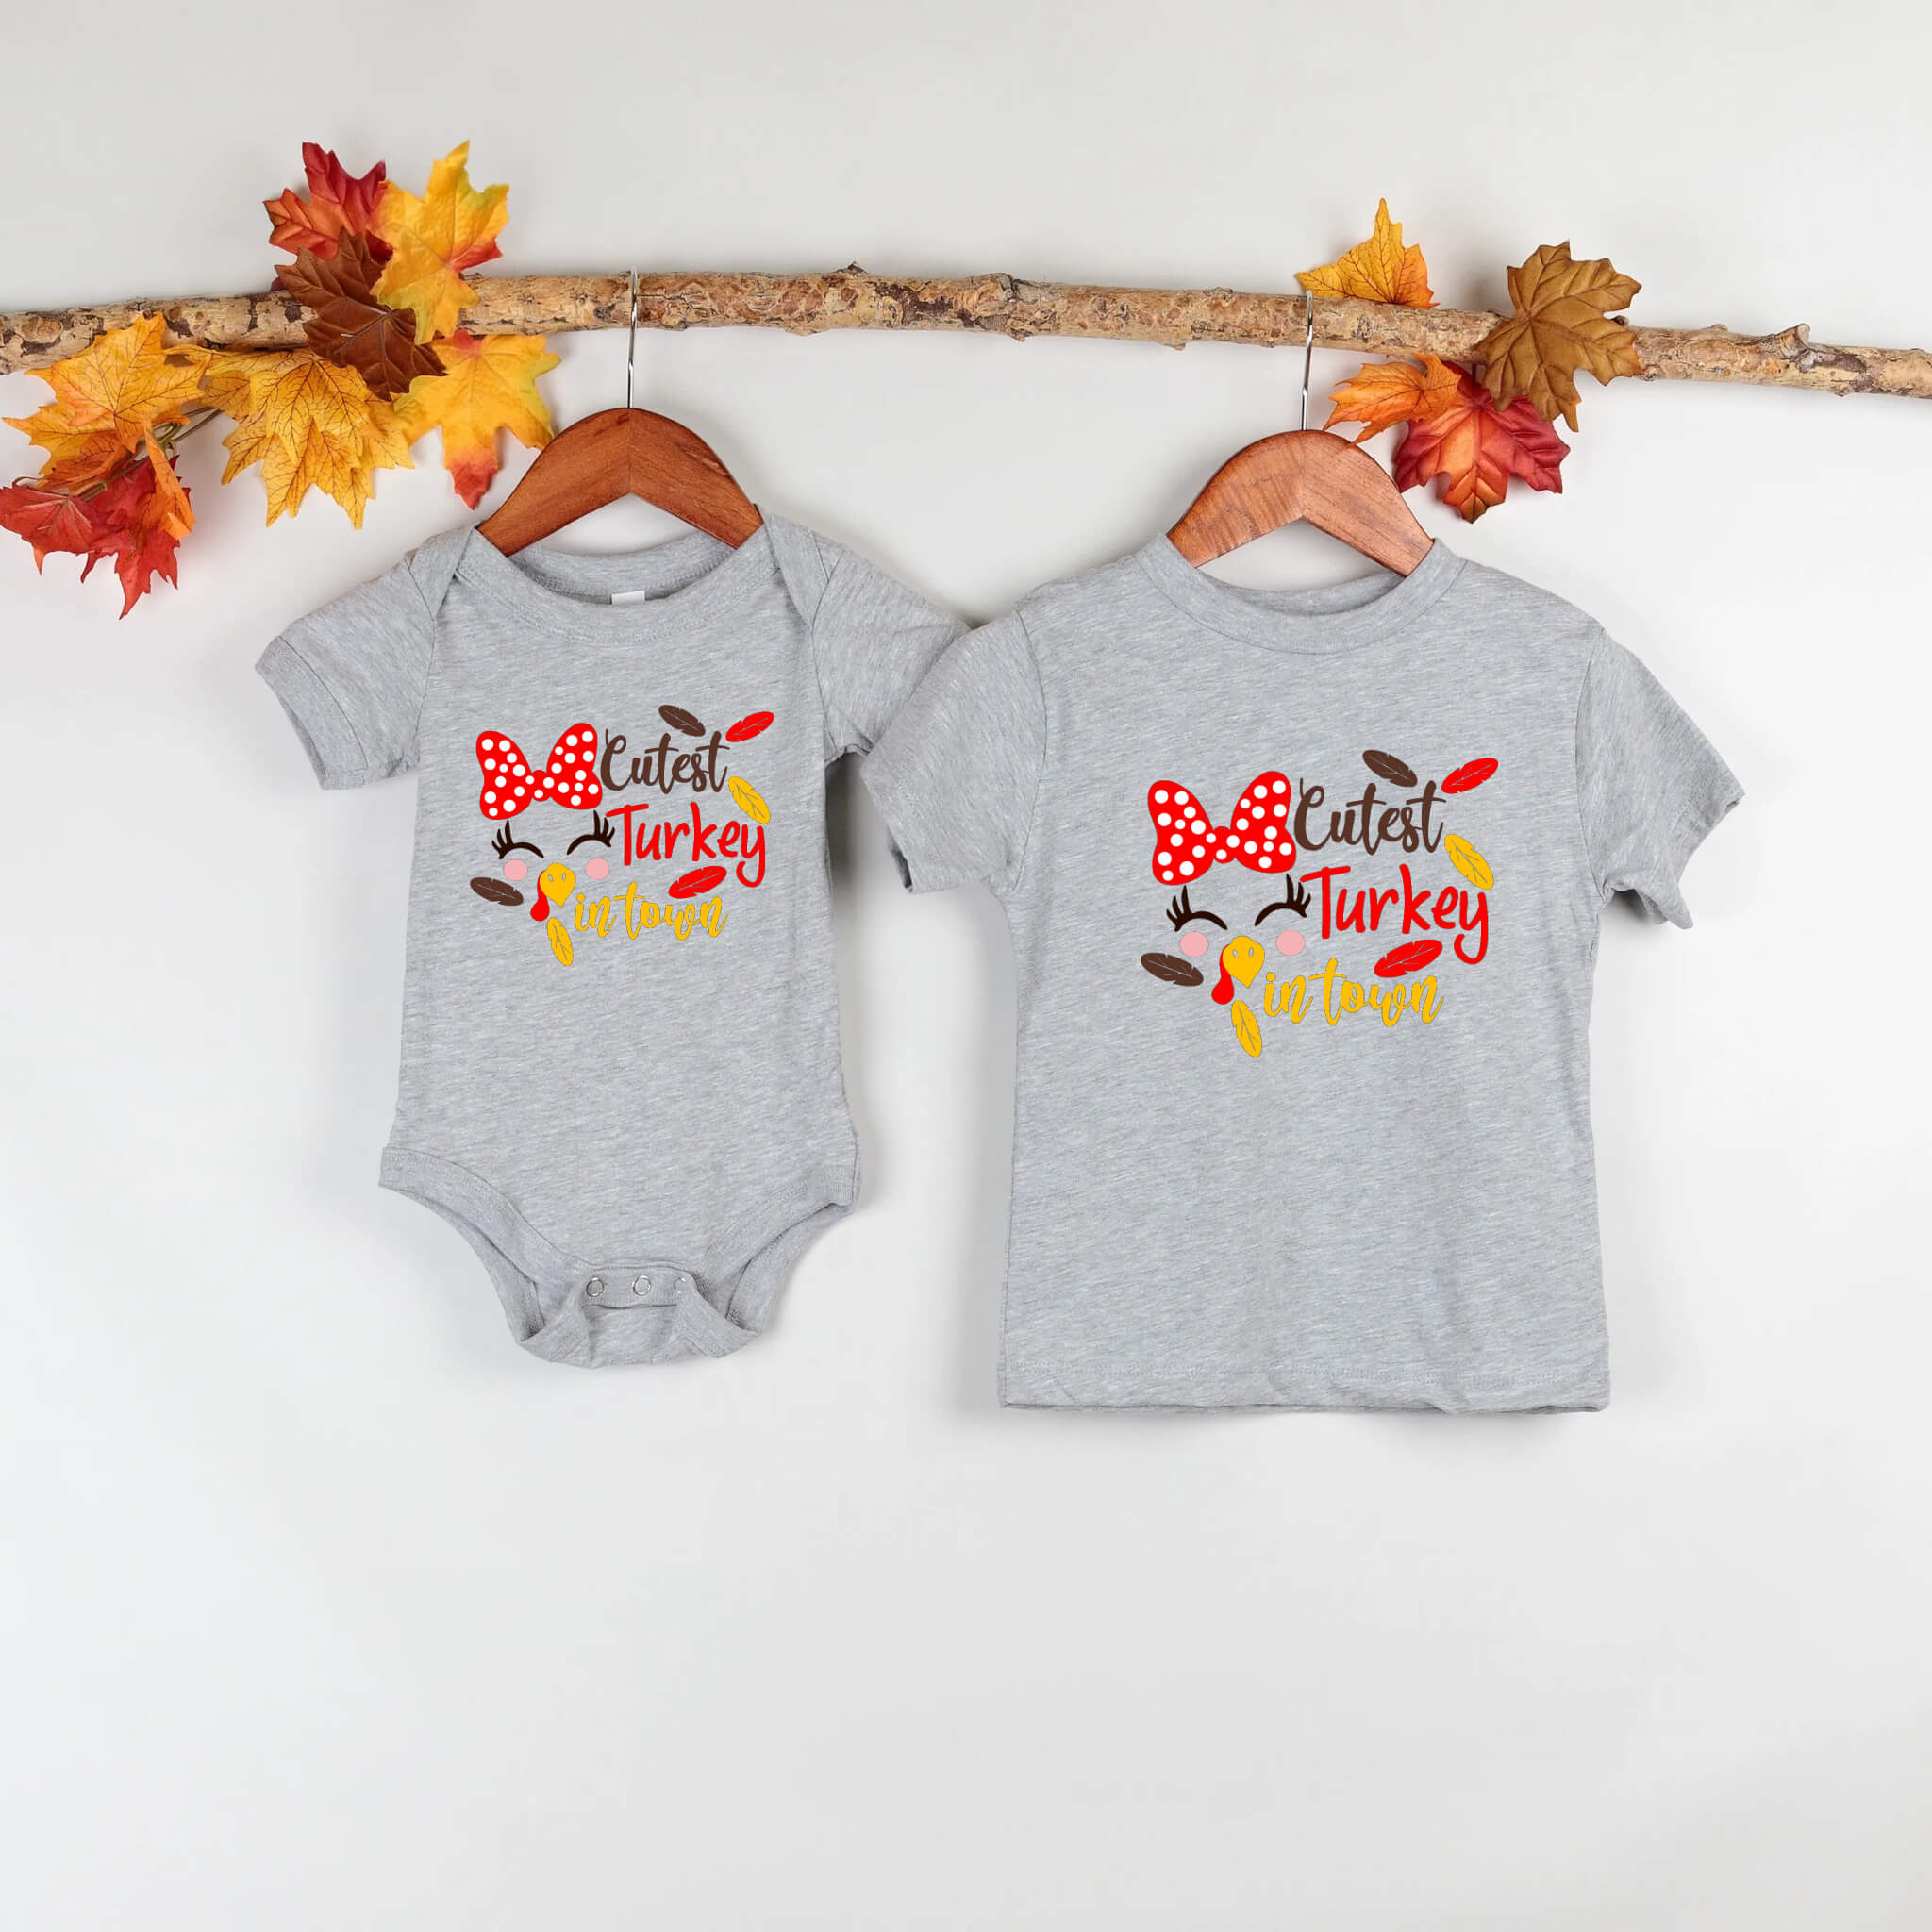 Camiseta o mono con estampado gráfico de Acción de Gracias para niñas de Fall Cutest Turkey In Town